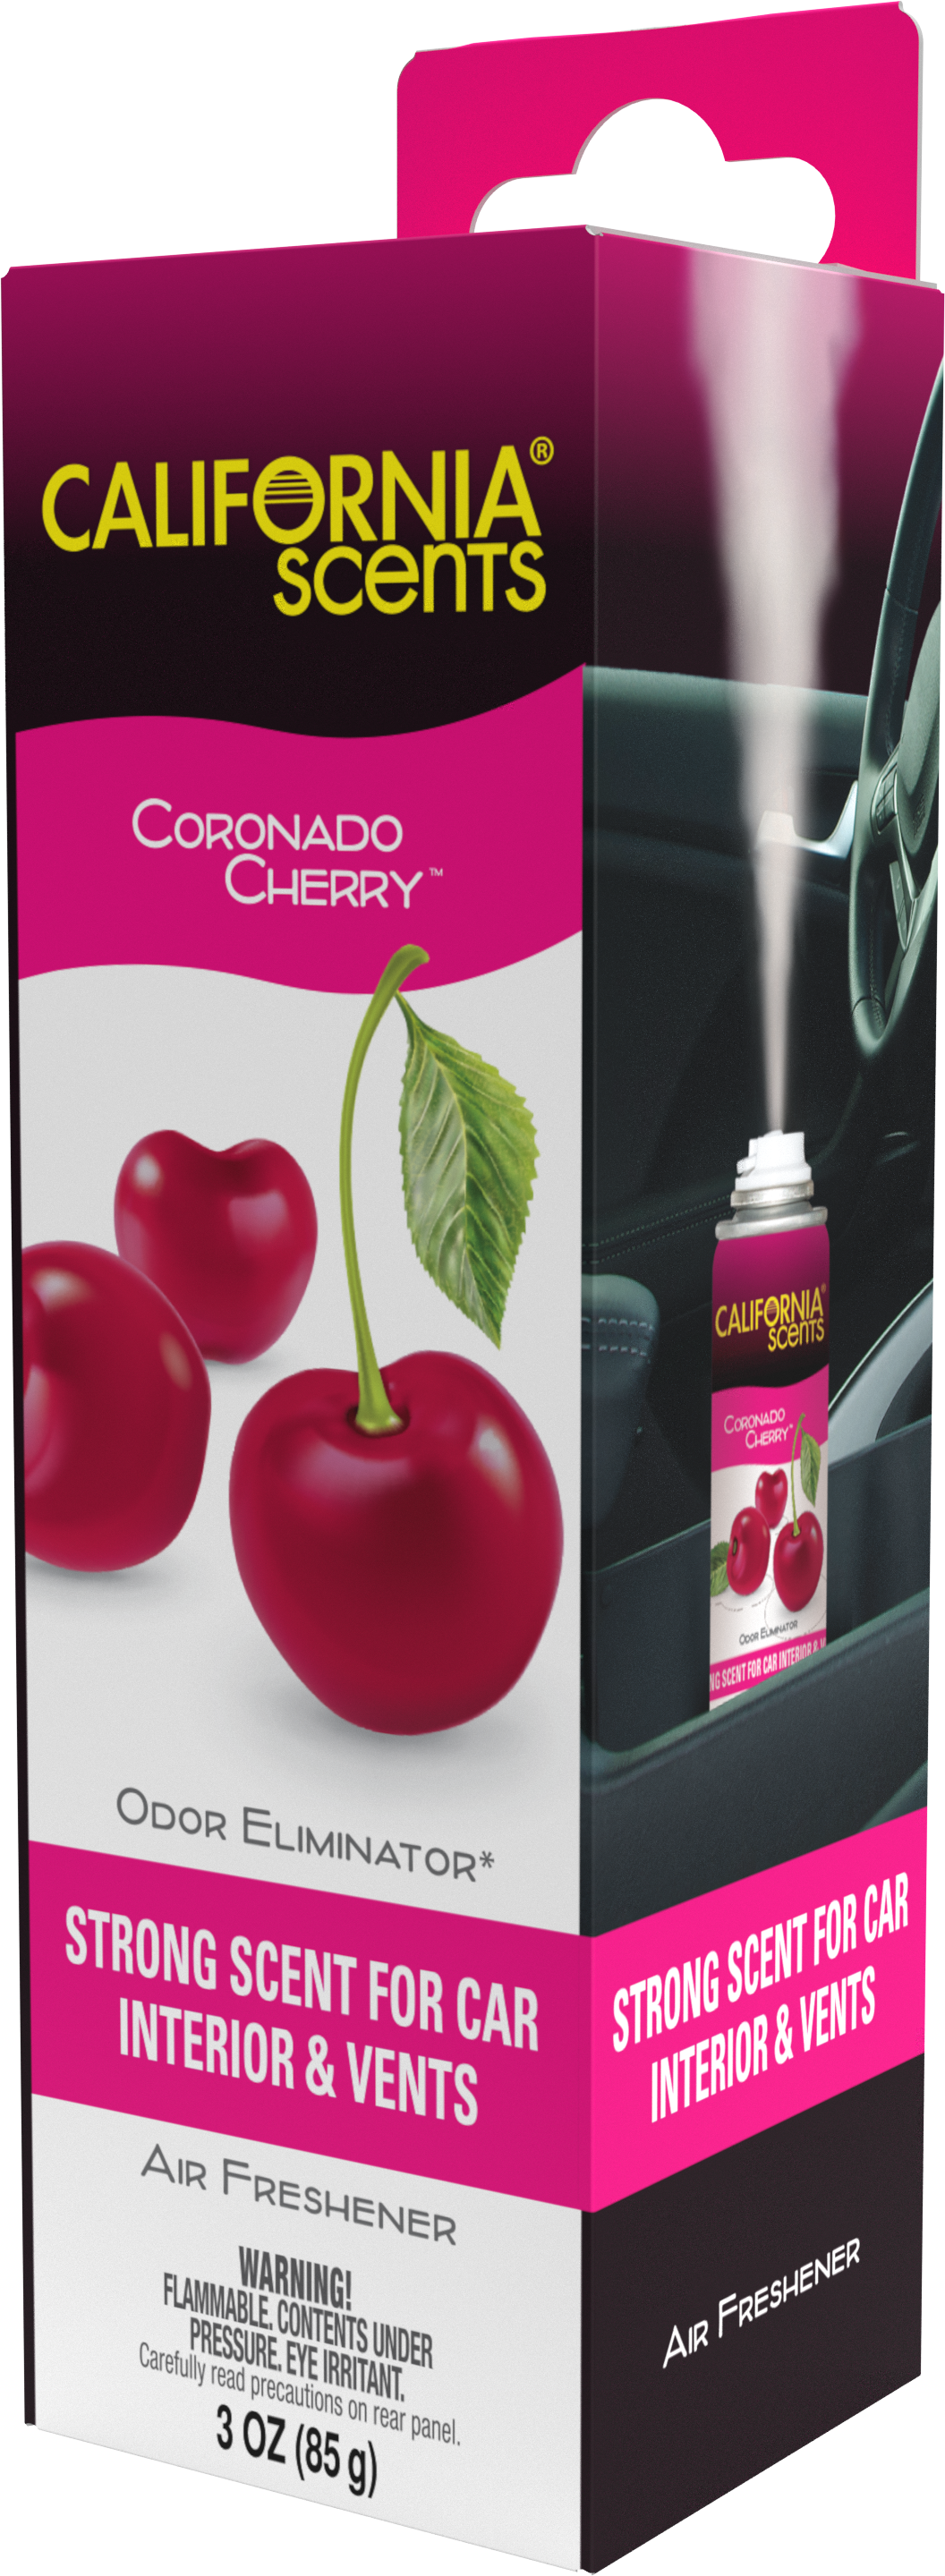 Car Air Freshener - California Scents - Coronado Cherry